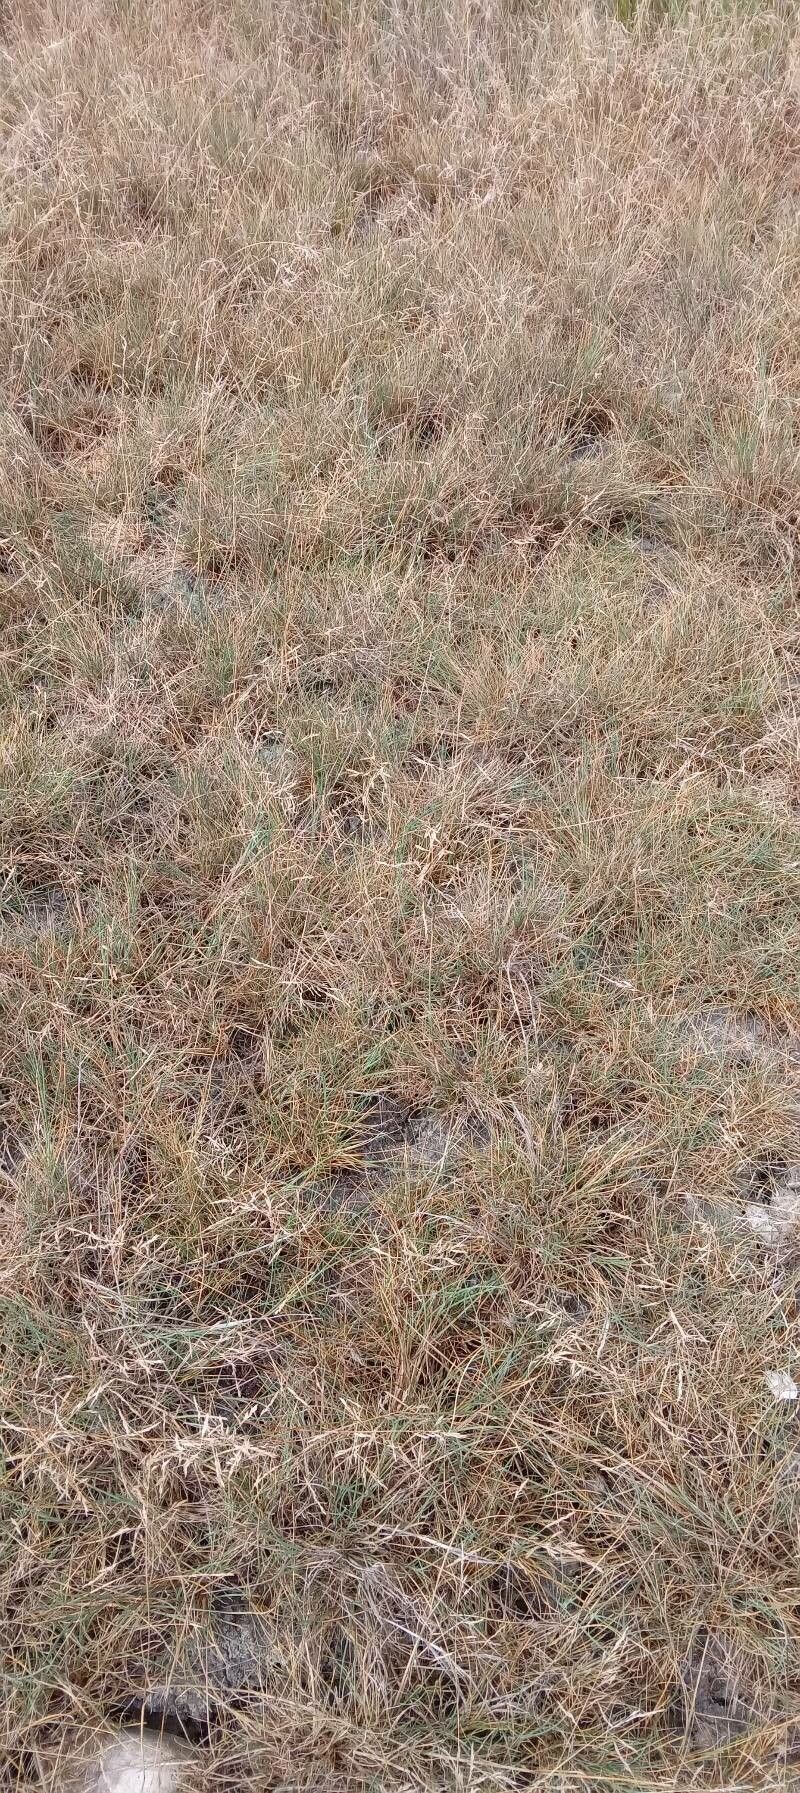 European alkali grass